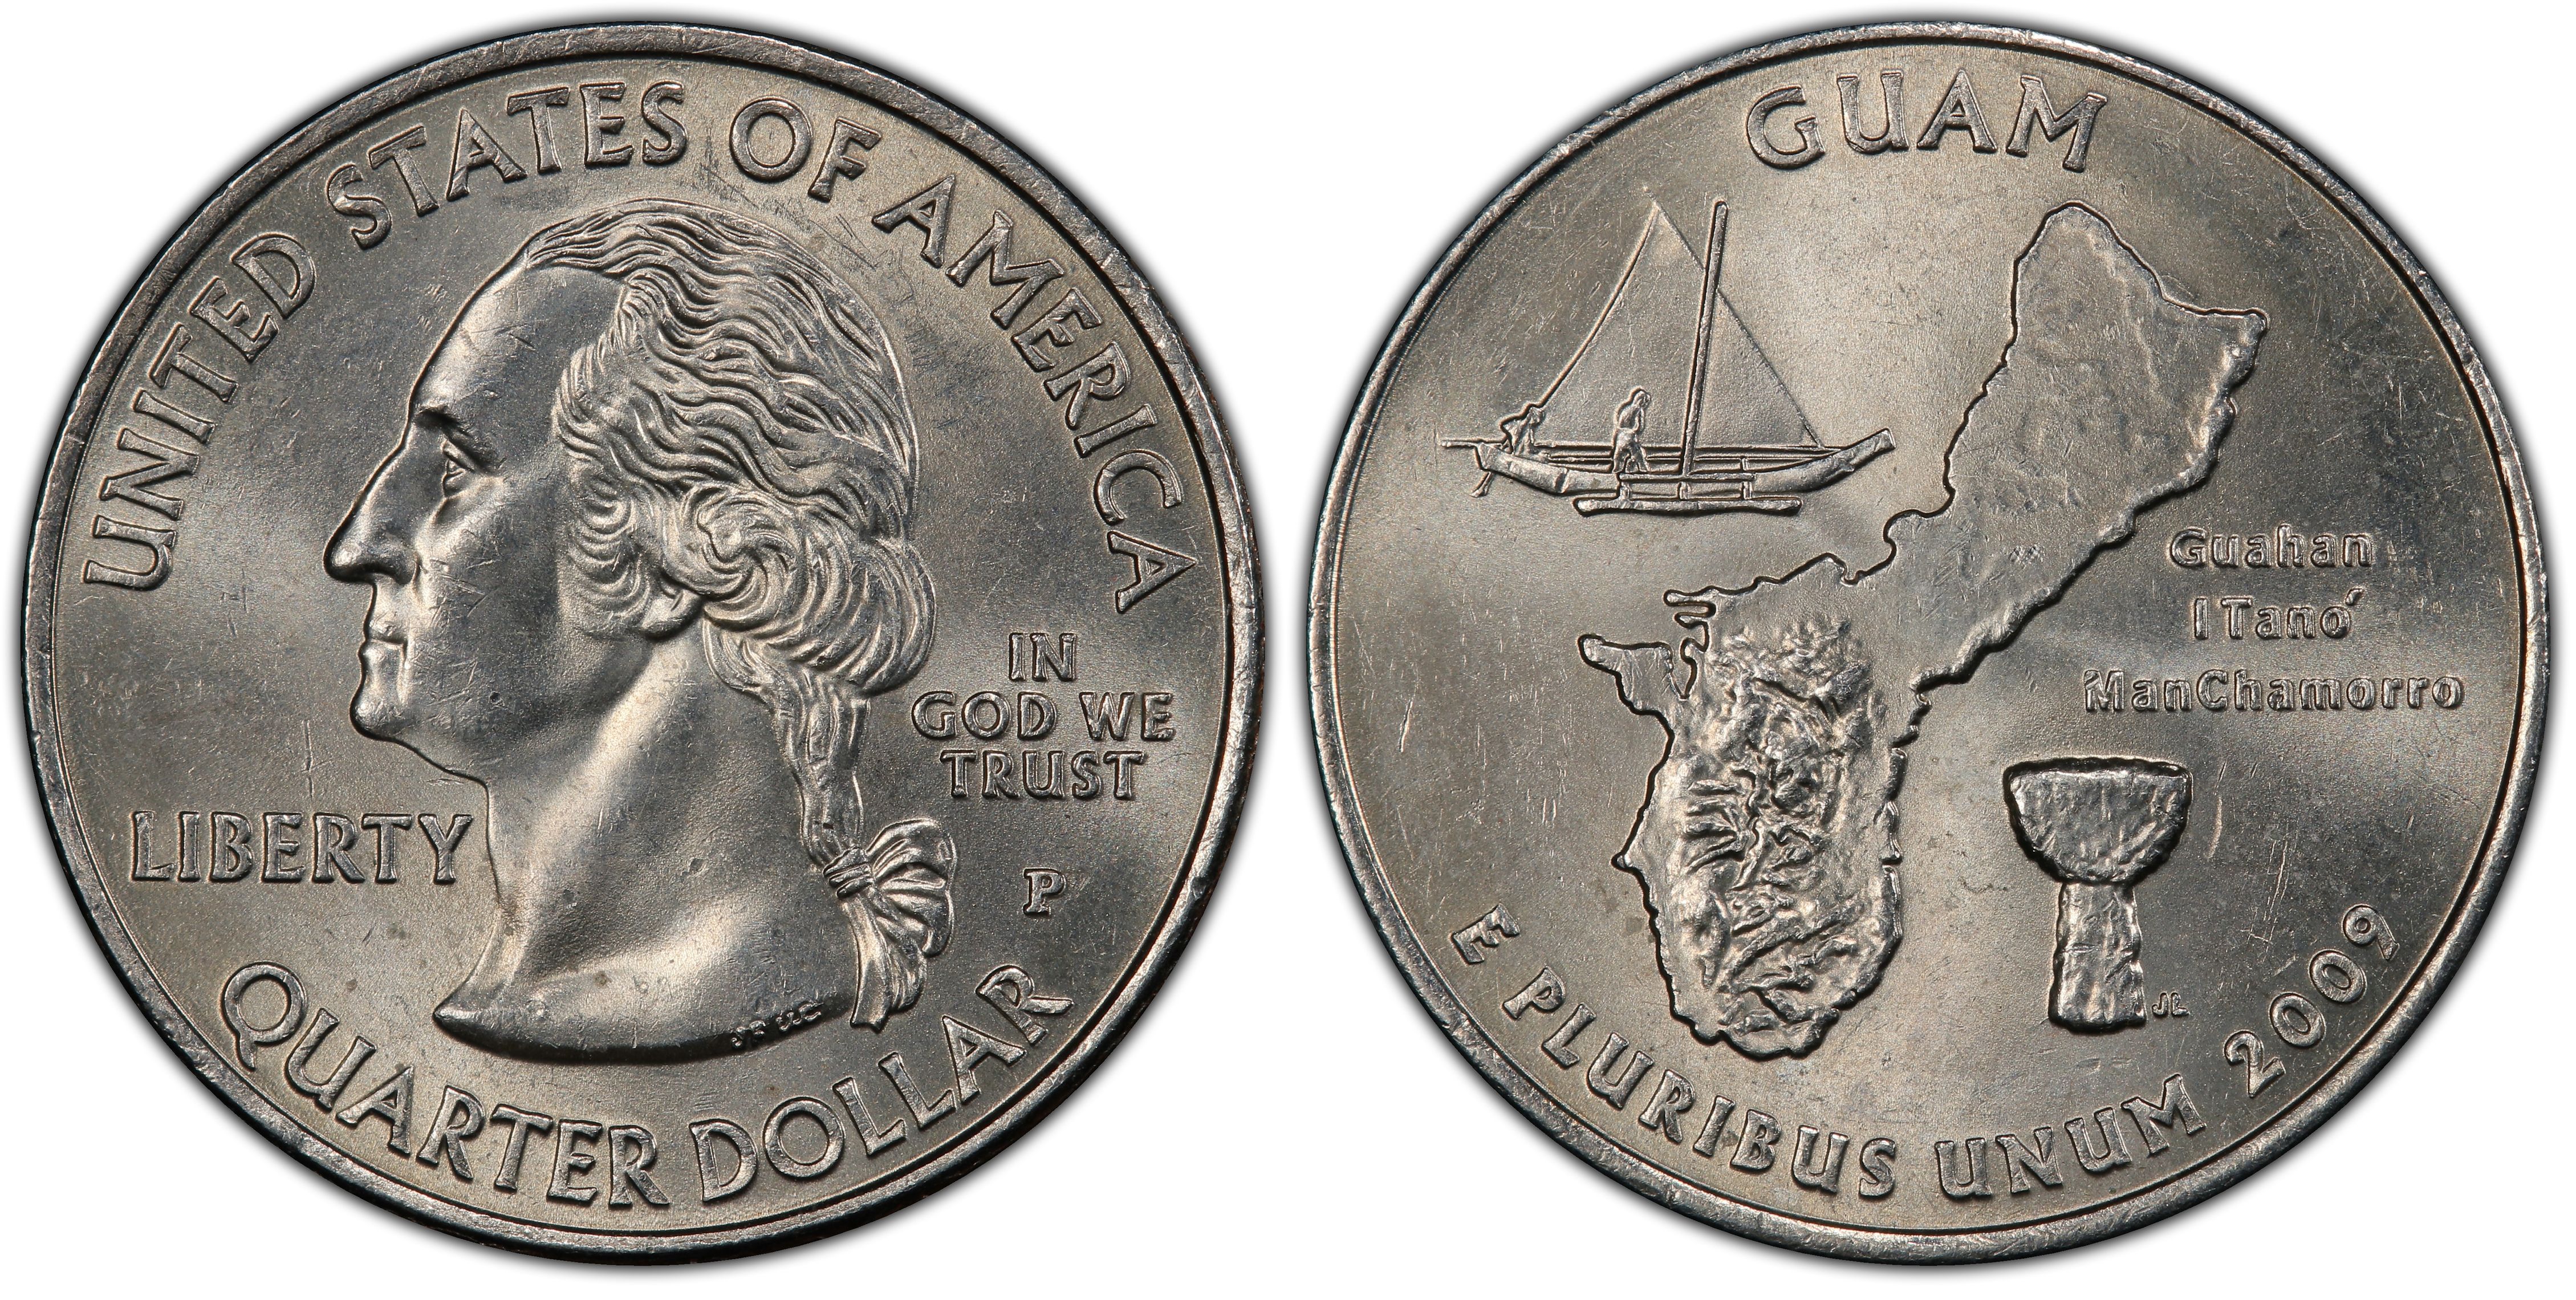 Territorial quarter from mint roll 1coin Philadelphia mint 2009 P Guam BU 